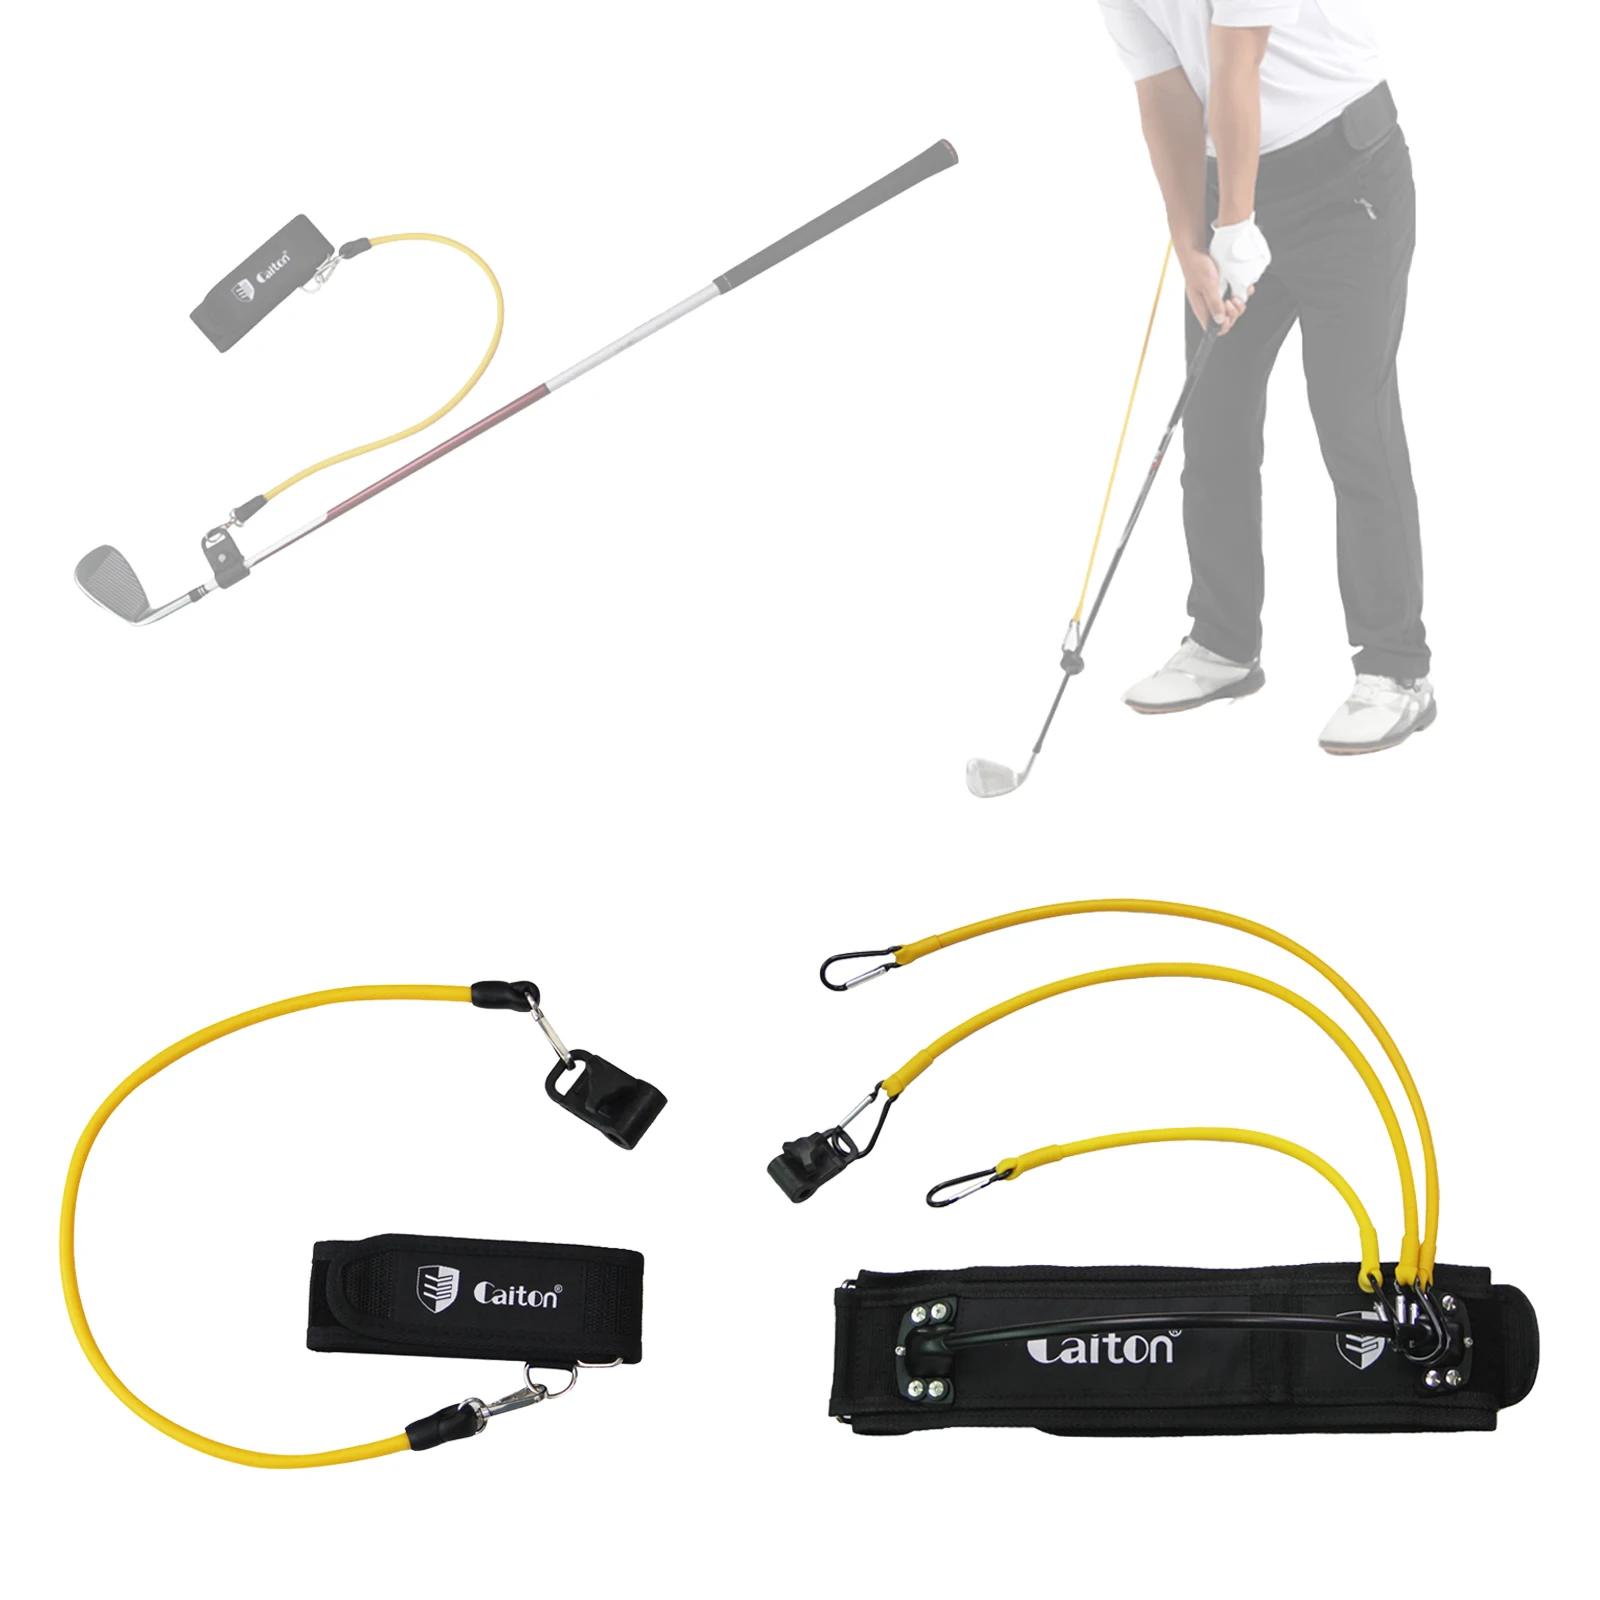 Golf Training Aids - Correct Golf Swing, Posture Corrector Golf Swing Training Band, Posture Correcting Practicing